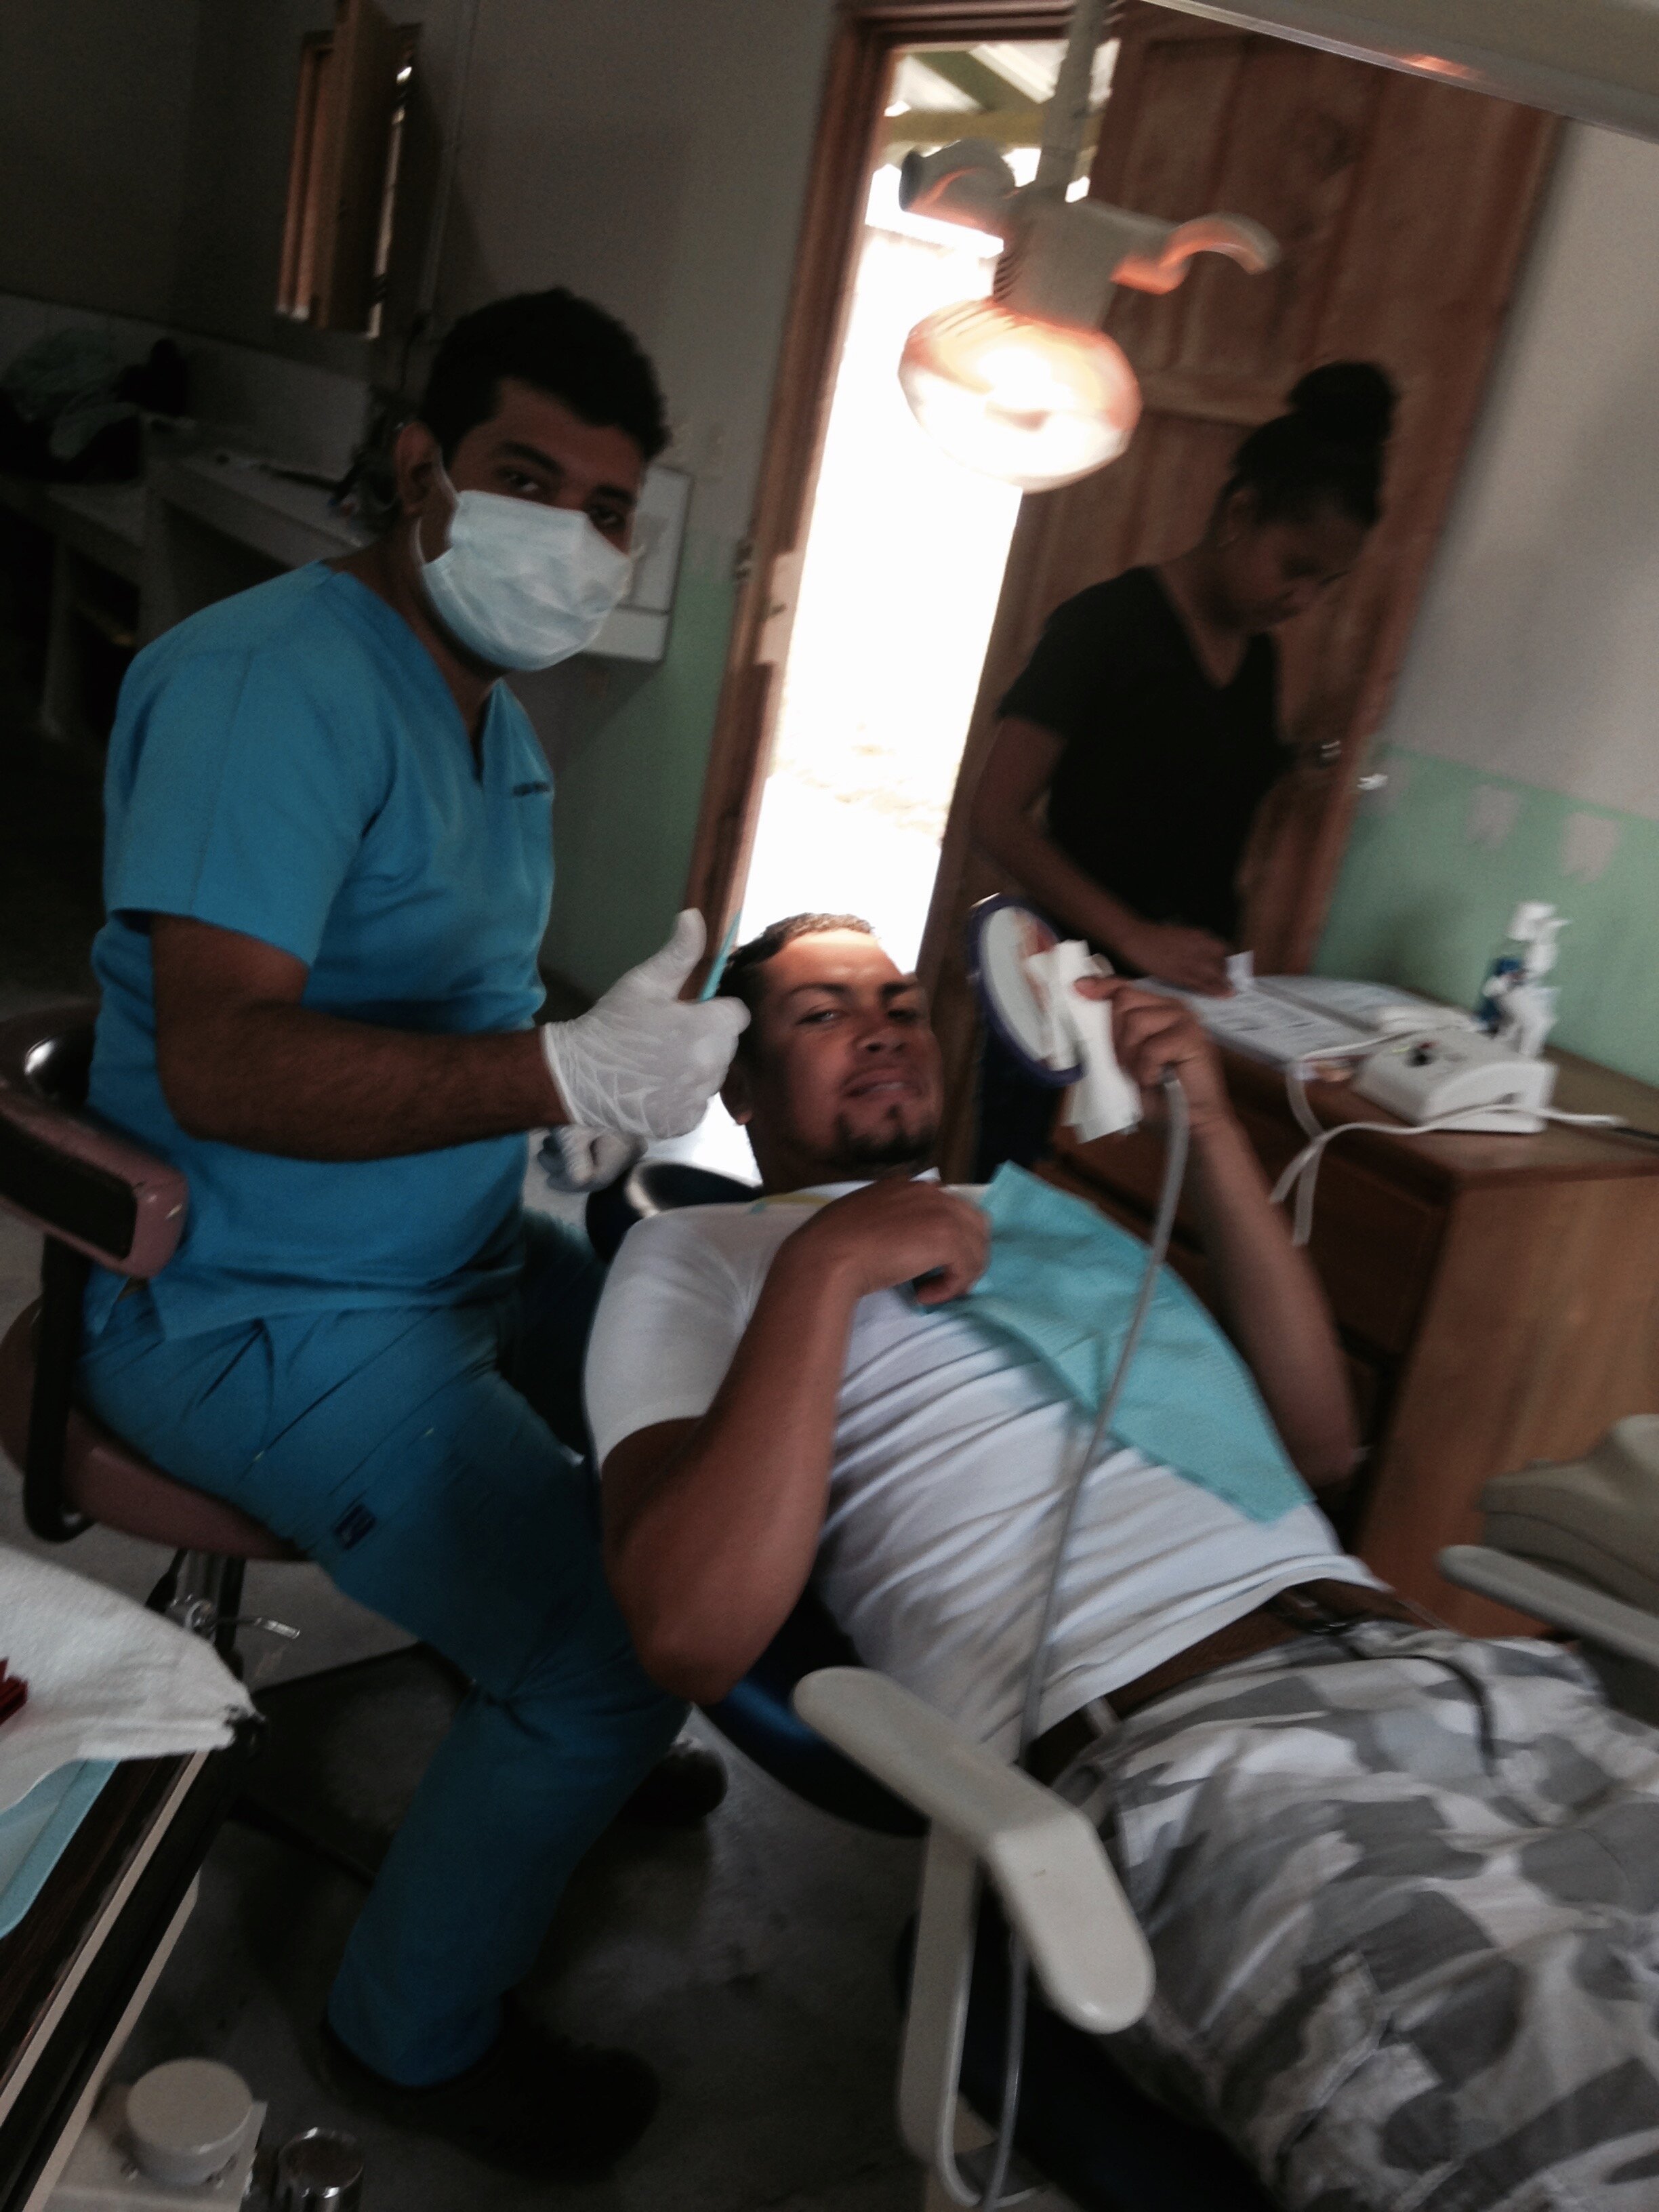 Luis the dentist at work.